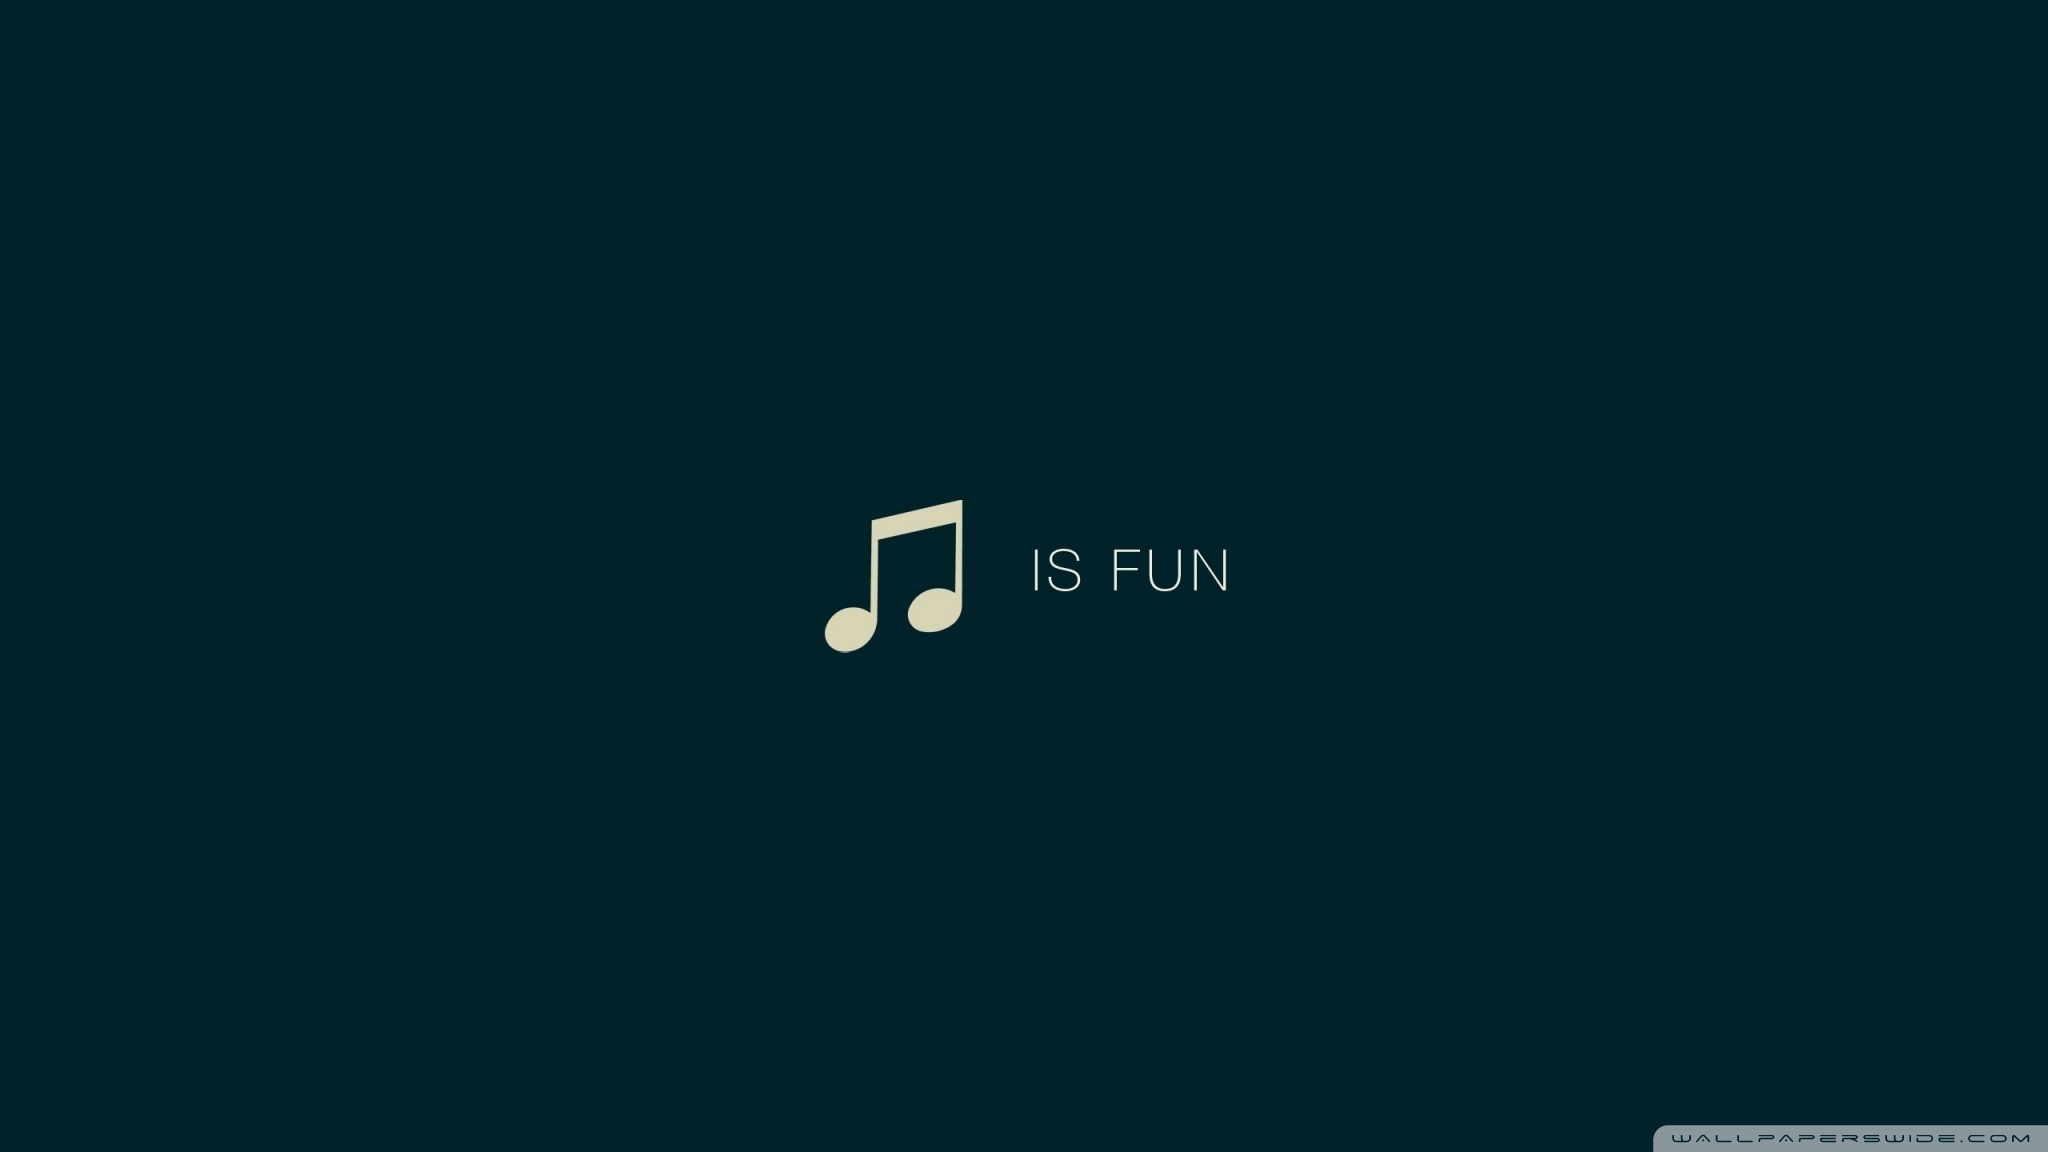 Music Is Fun Ultra Hd Desktop Background Wallpaper For 4k Uhd Tv